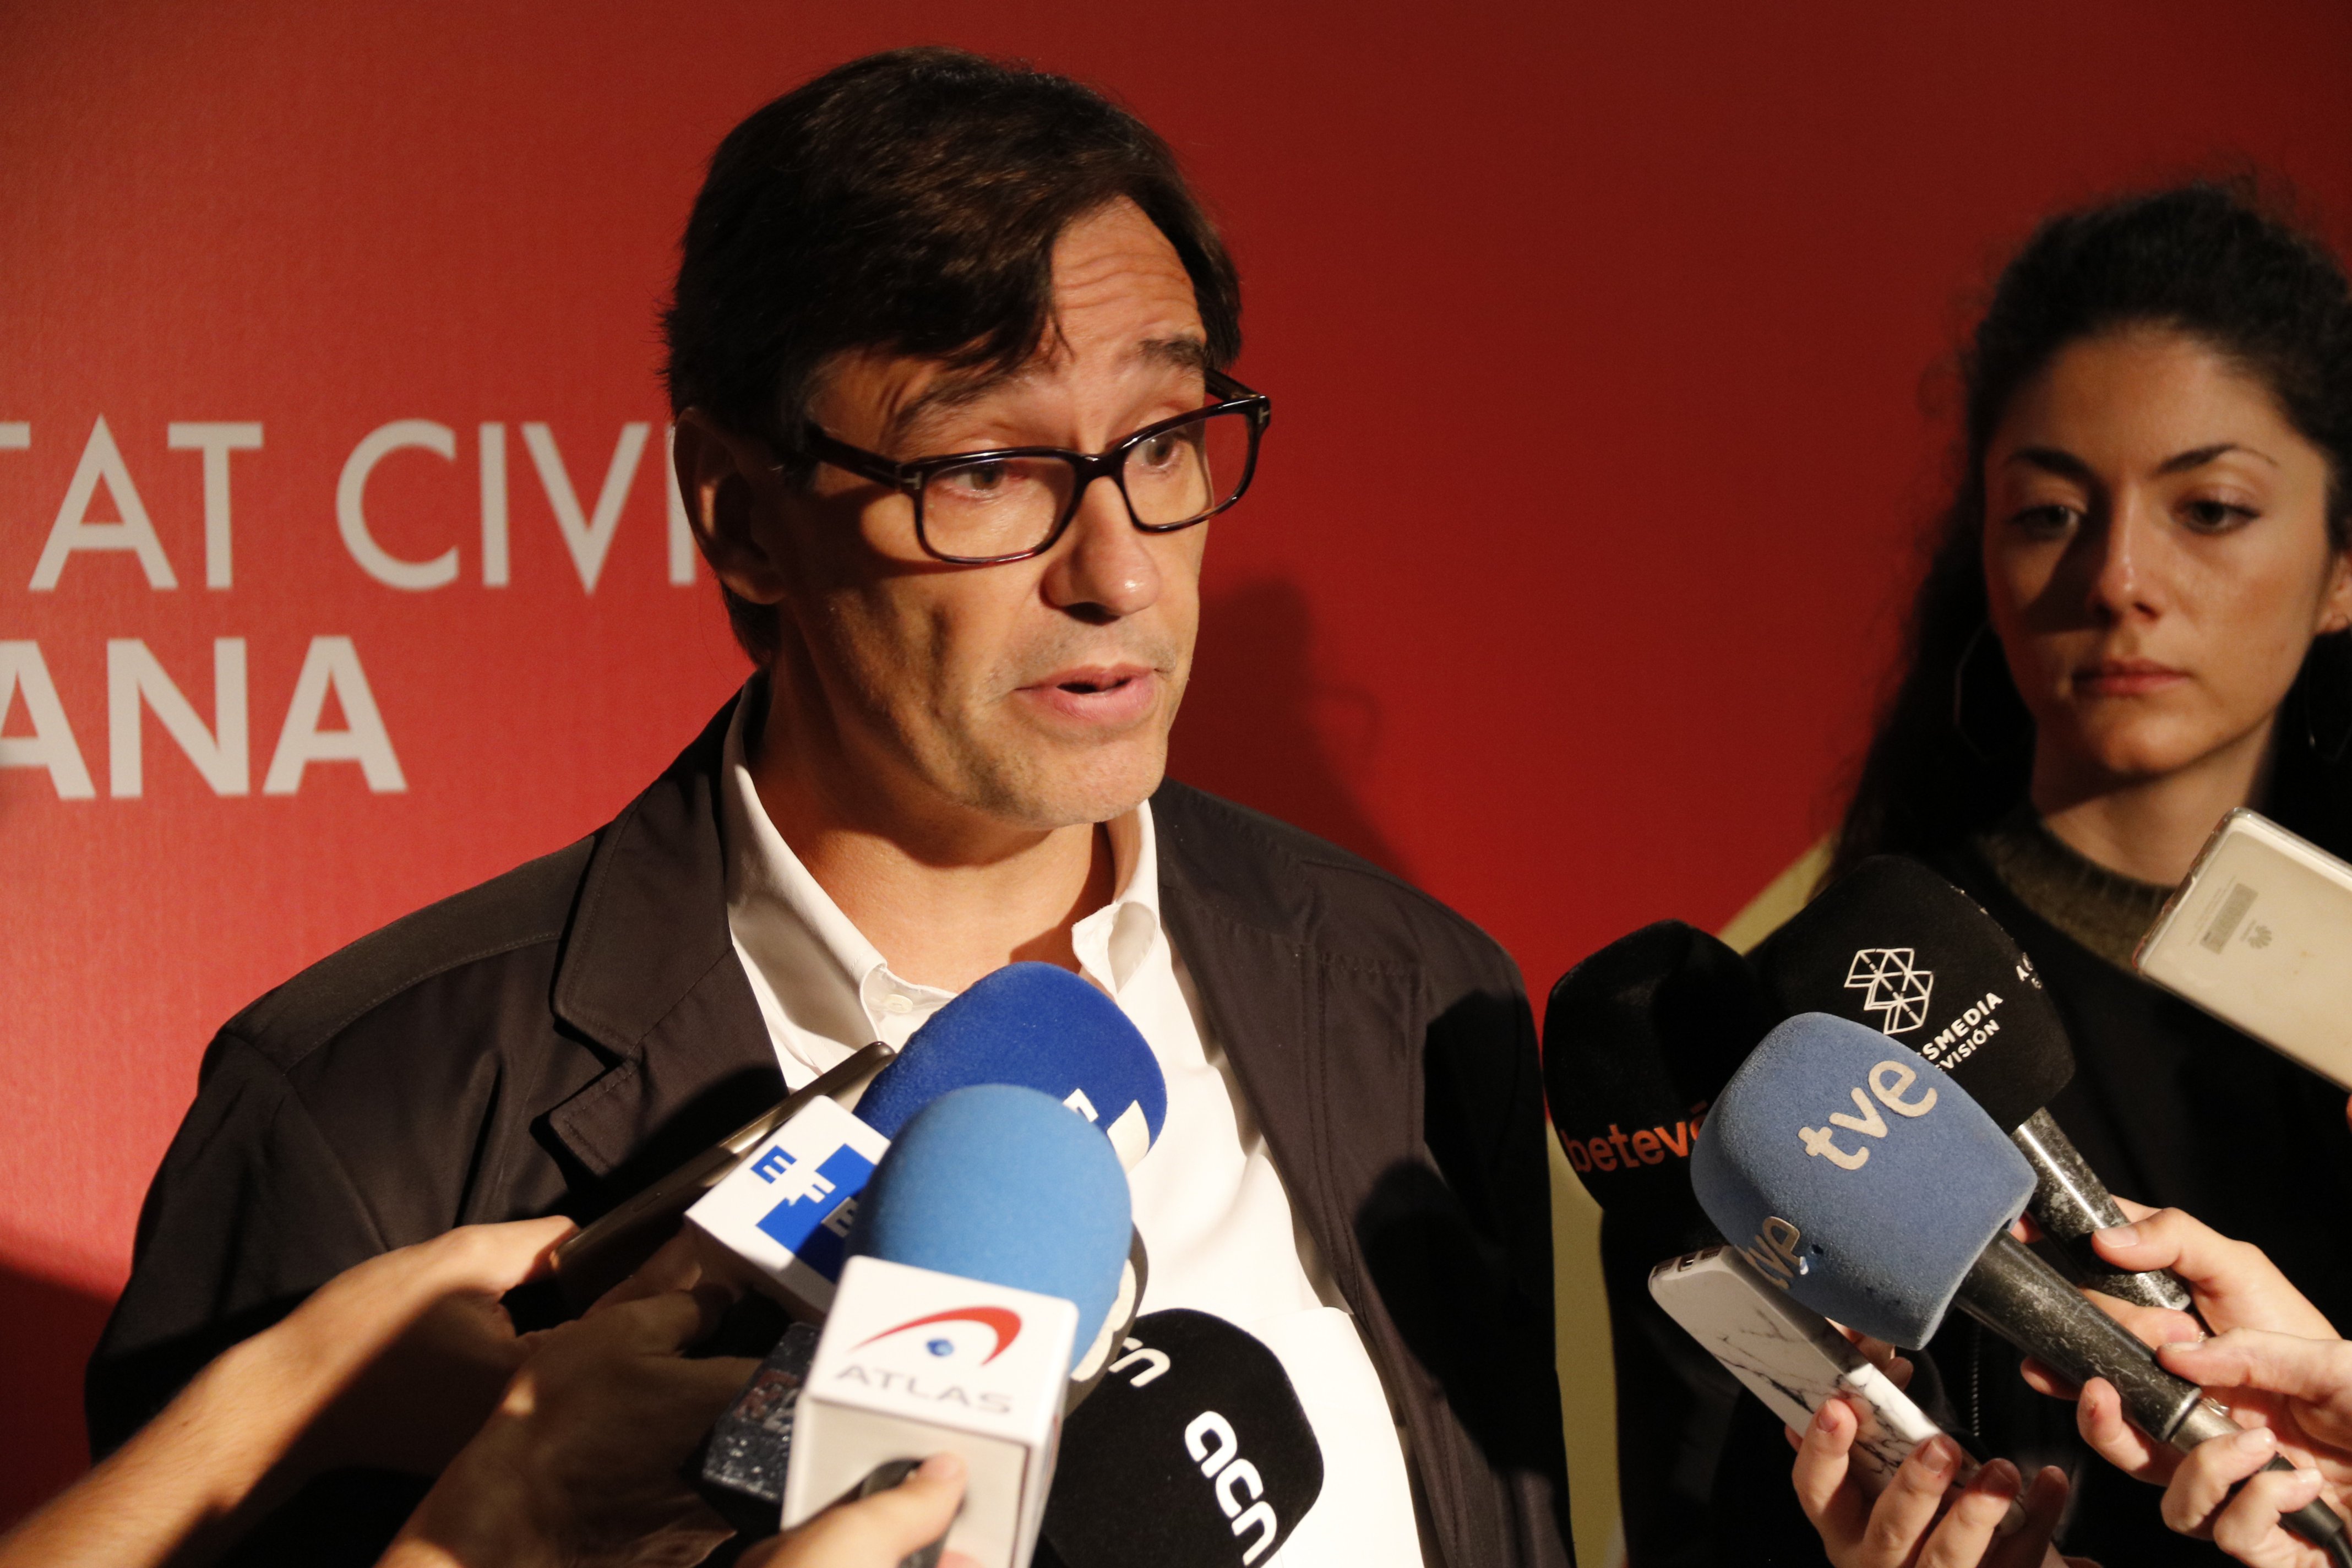 Societat Civil vuelve a reunir al PSC con PP y Cs en un acto españolista